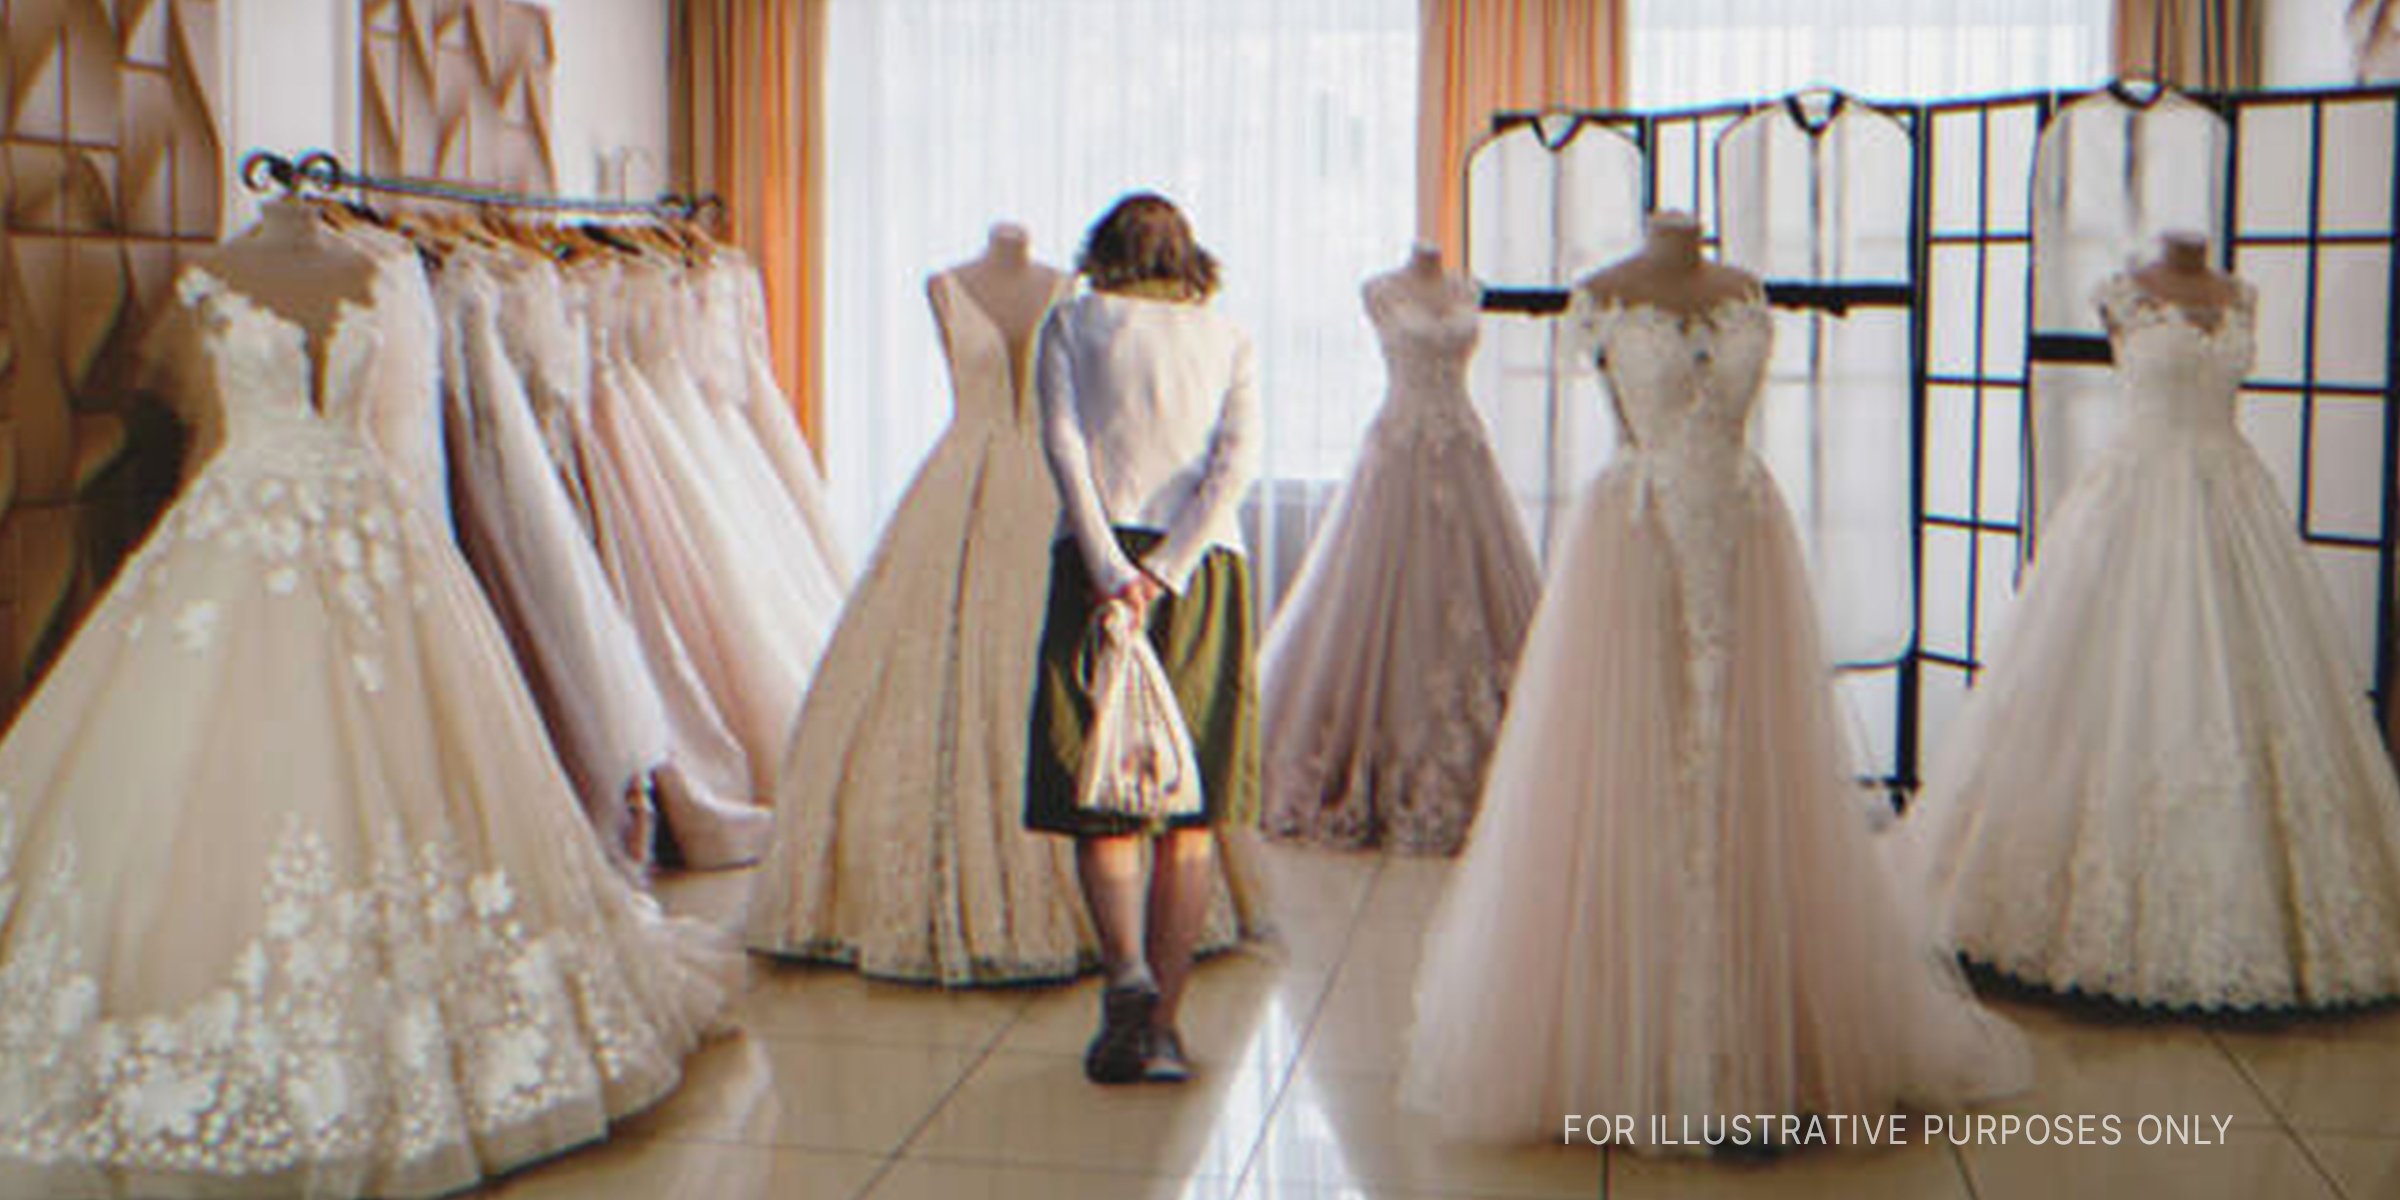 Woman in bridal store | Source: Shutterstock